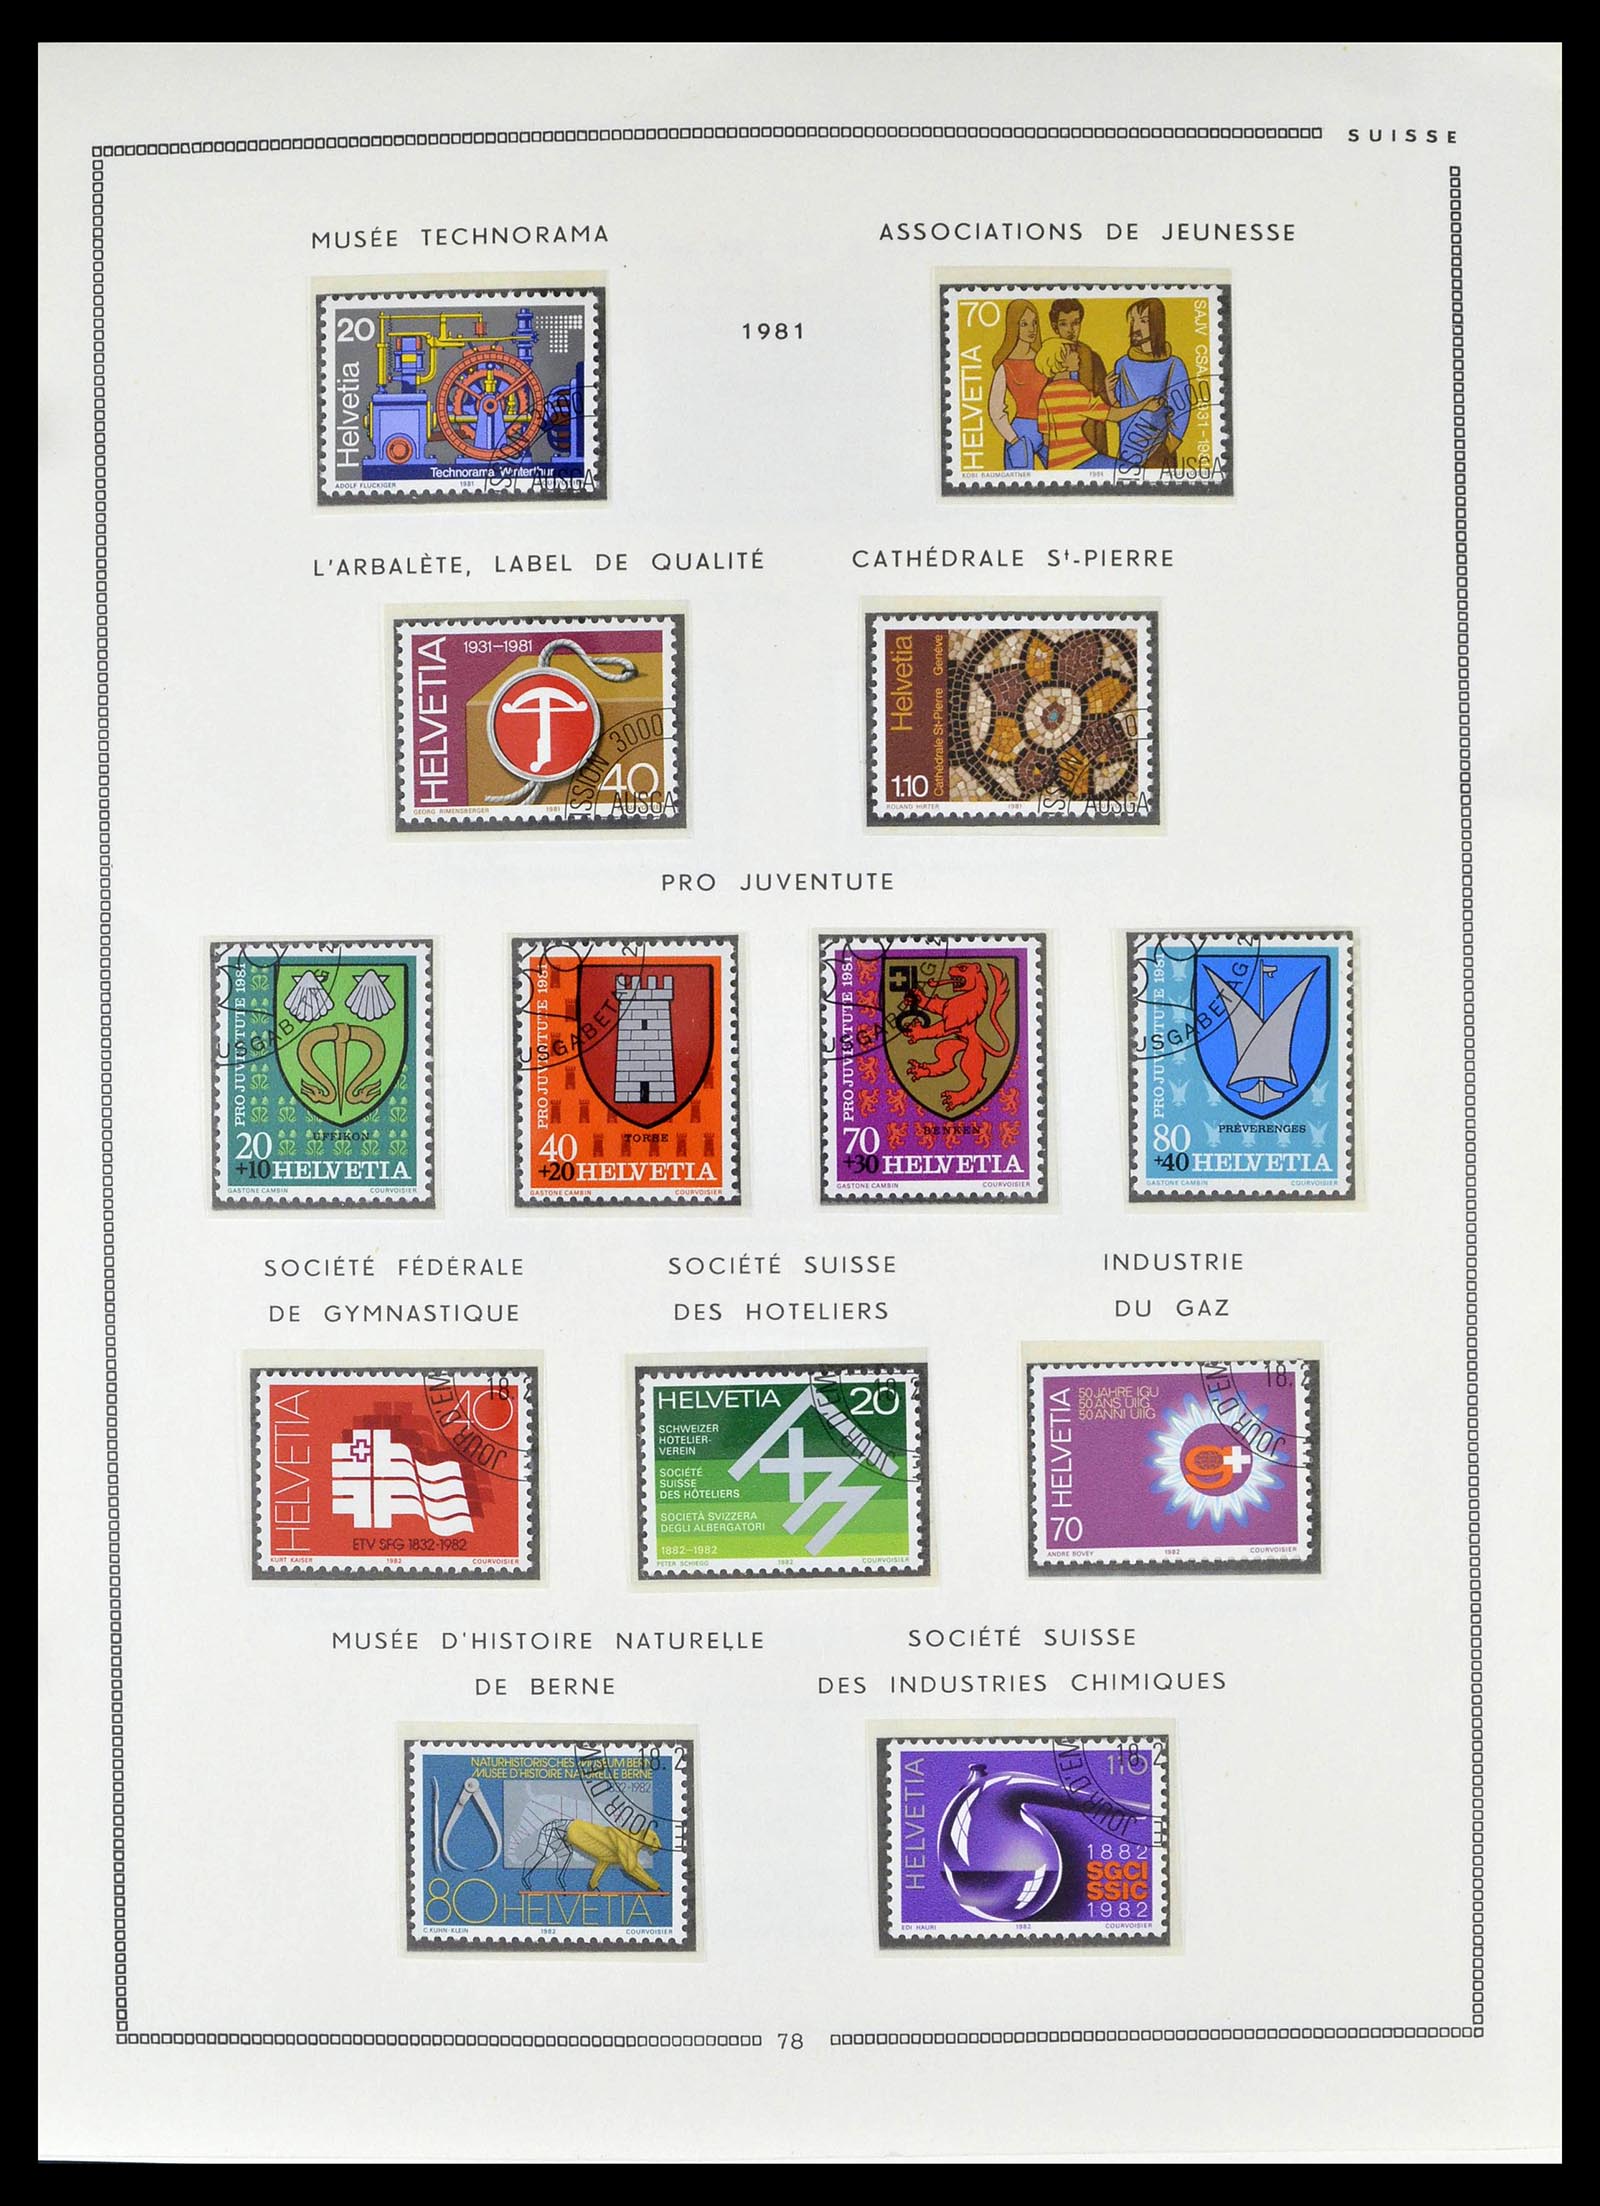 39094 0076 - Stamp collection 39094 Switzerland 1850-2005.